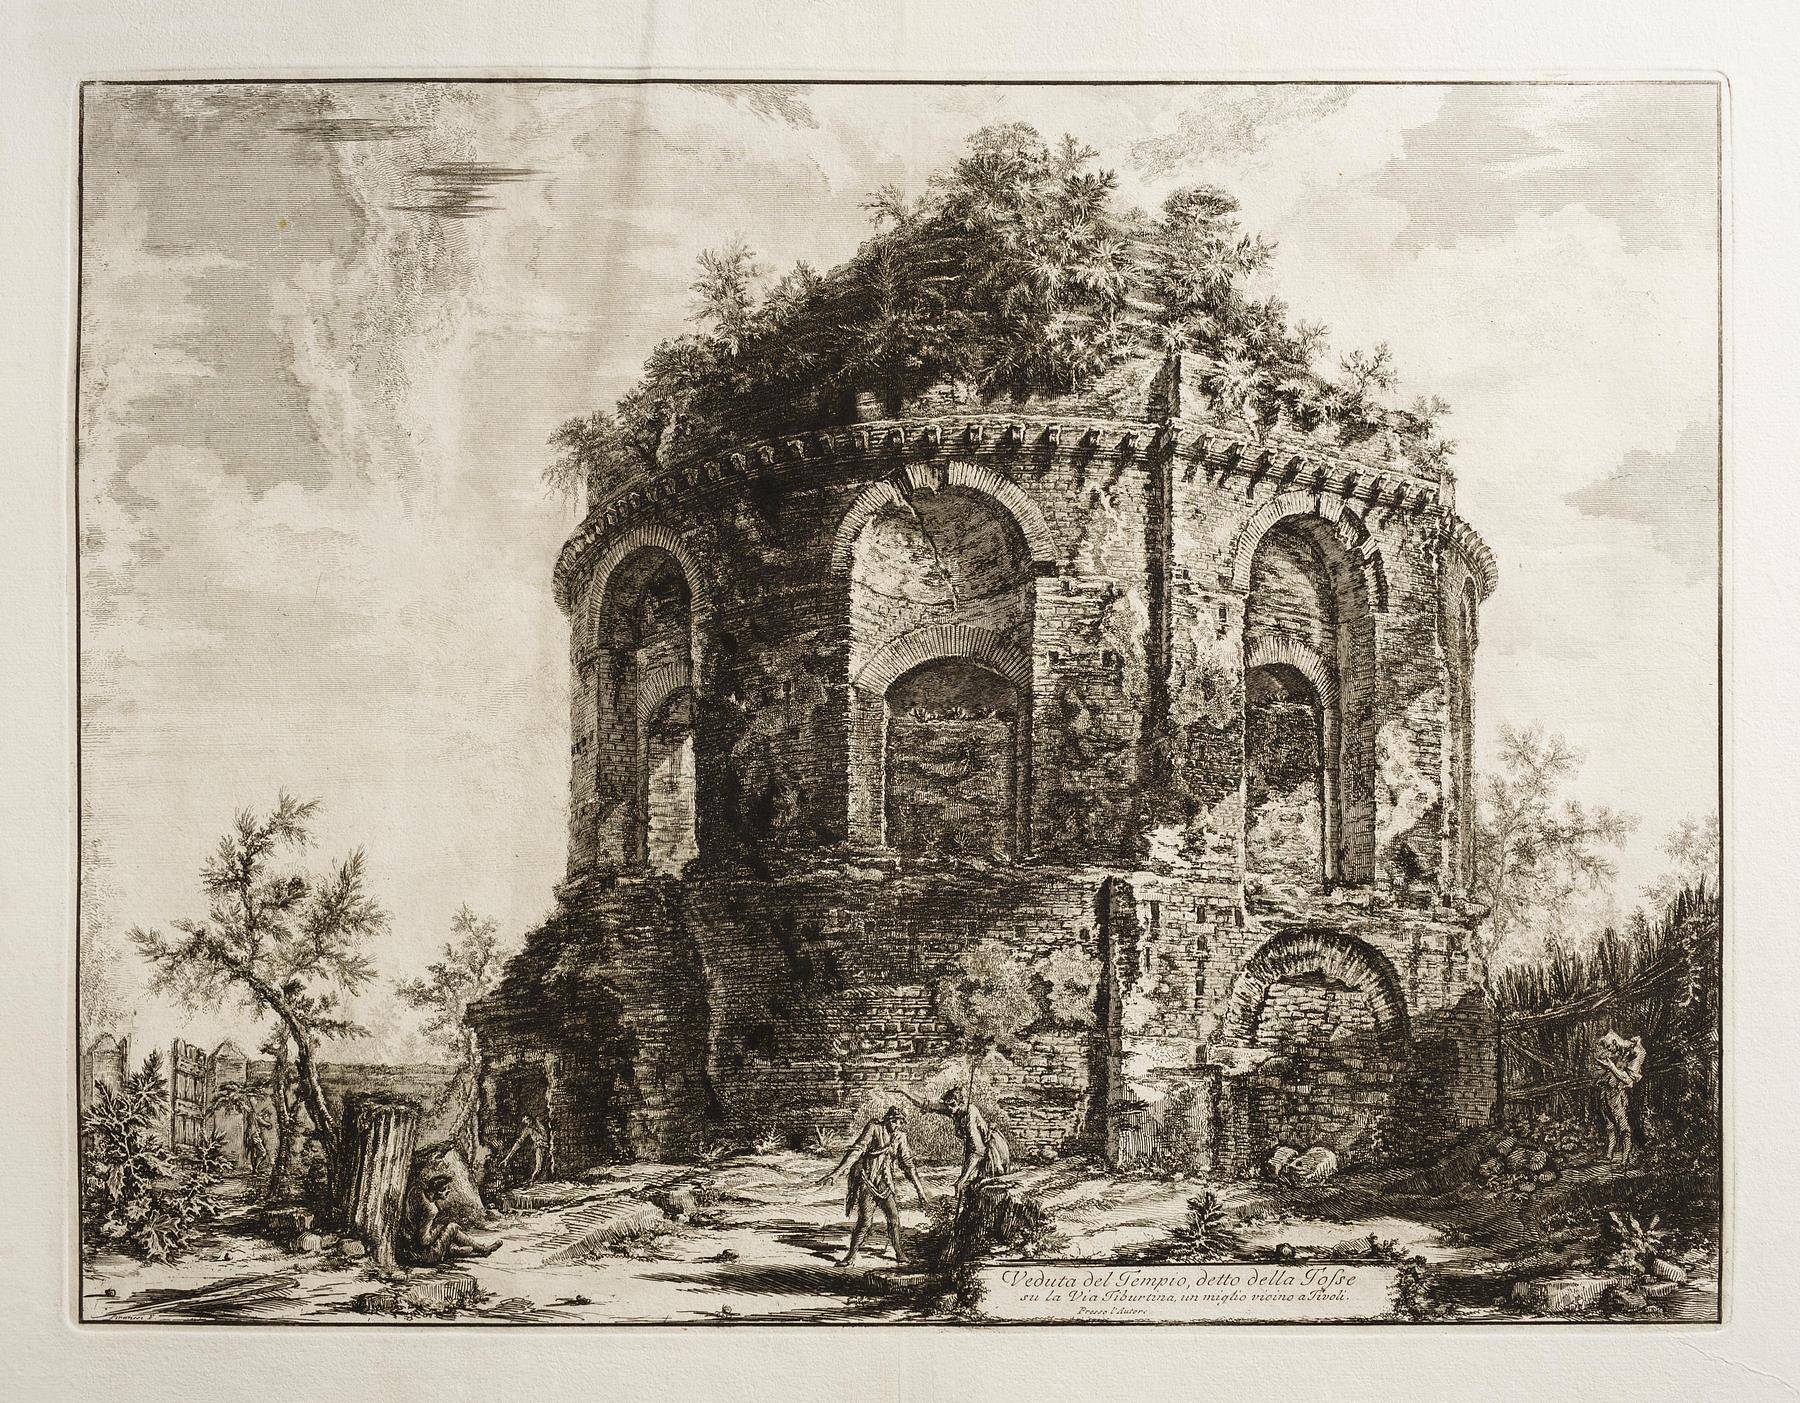 Prospekt af Tempio della Tosse i Tivoli, E315,30